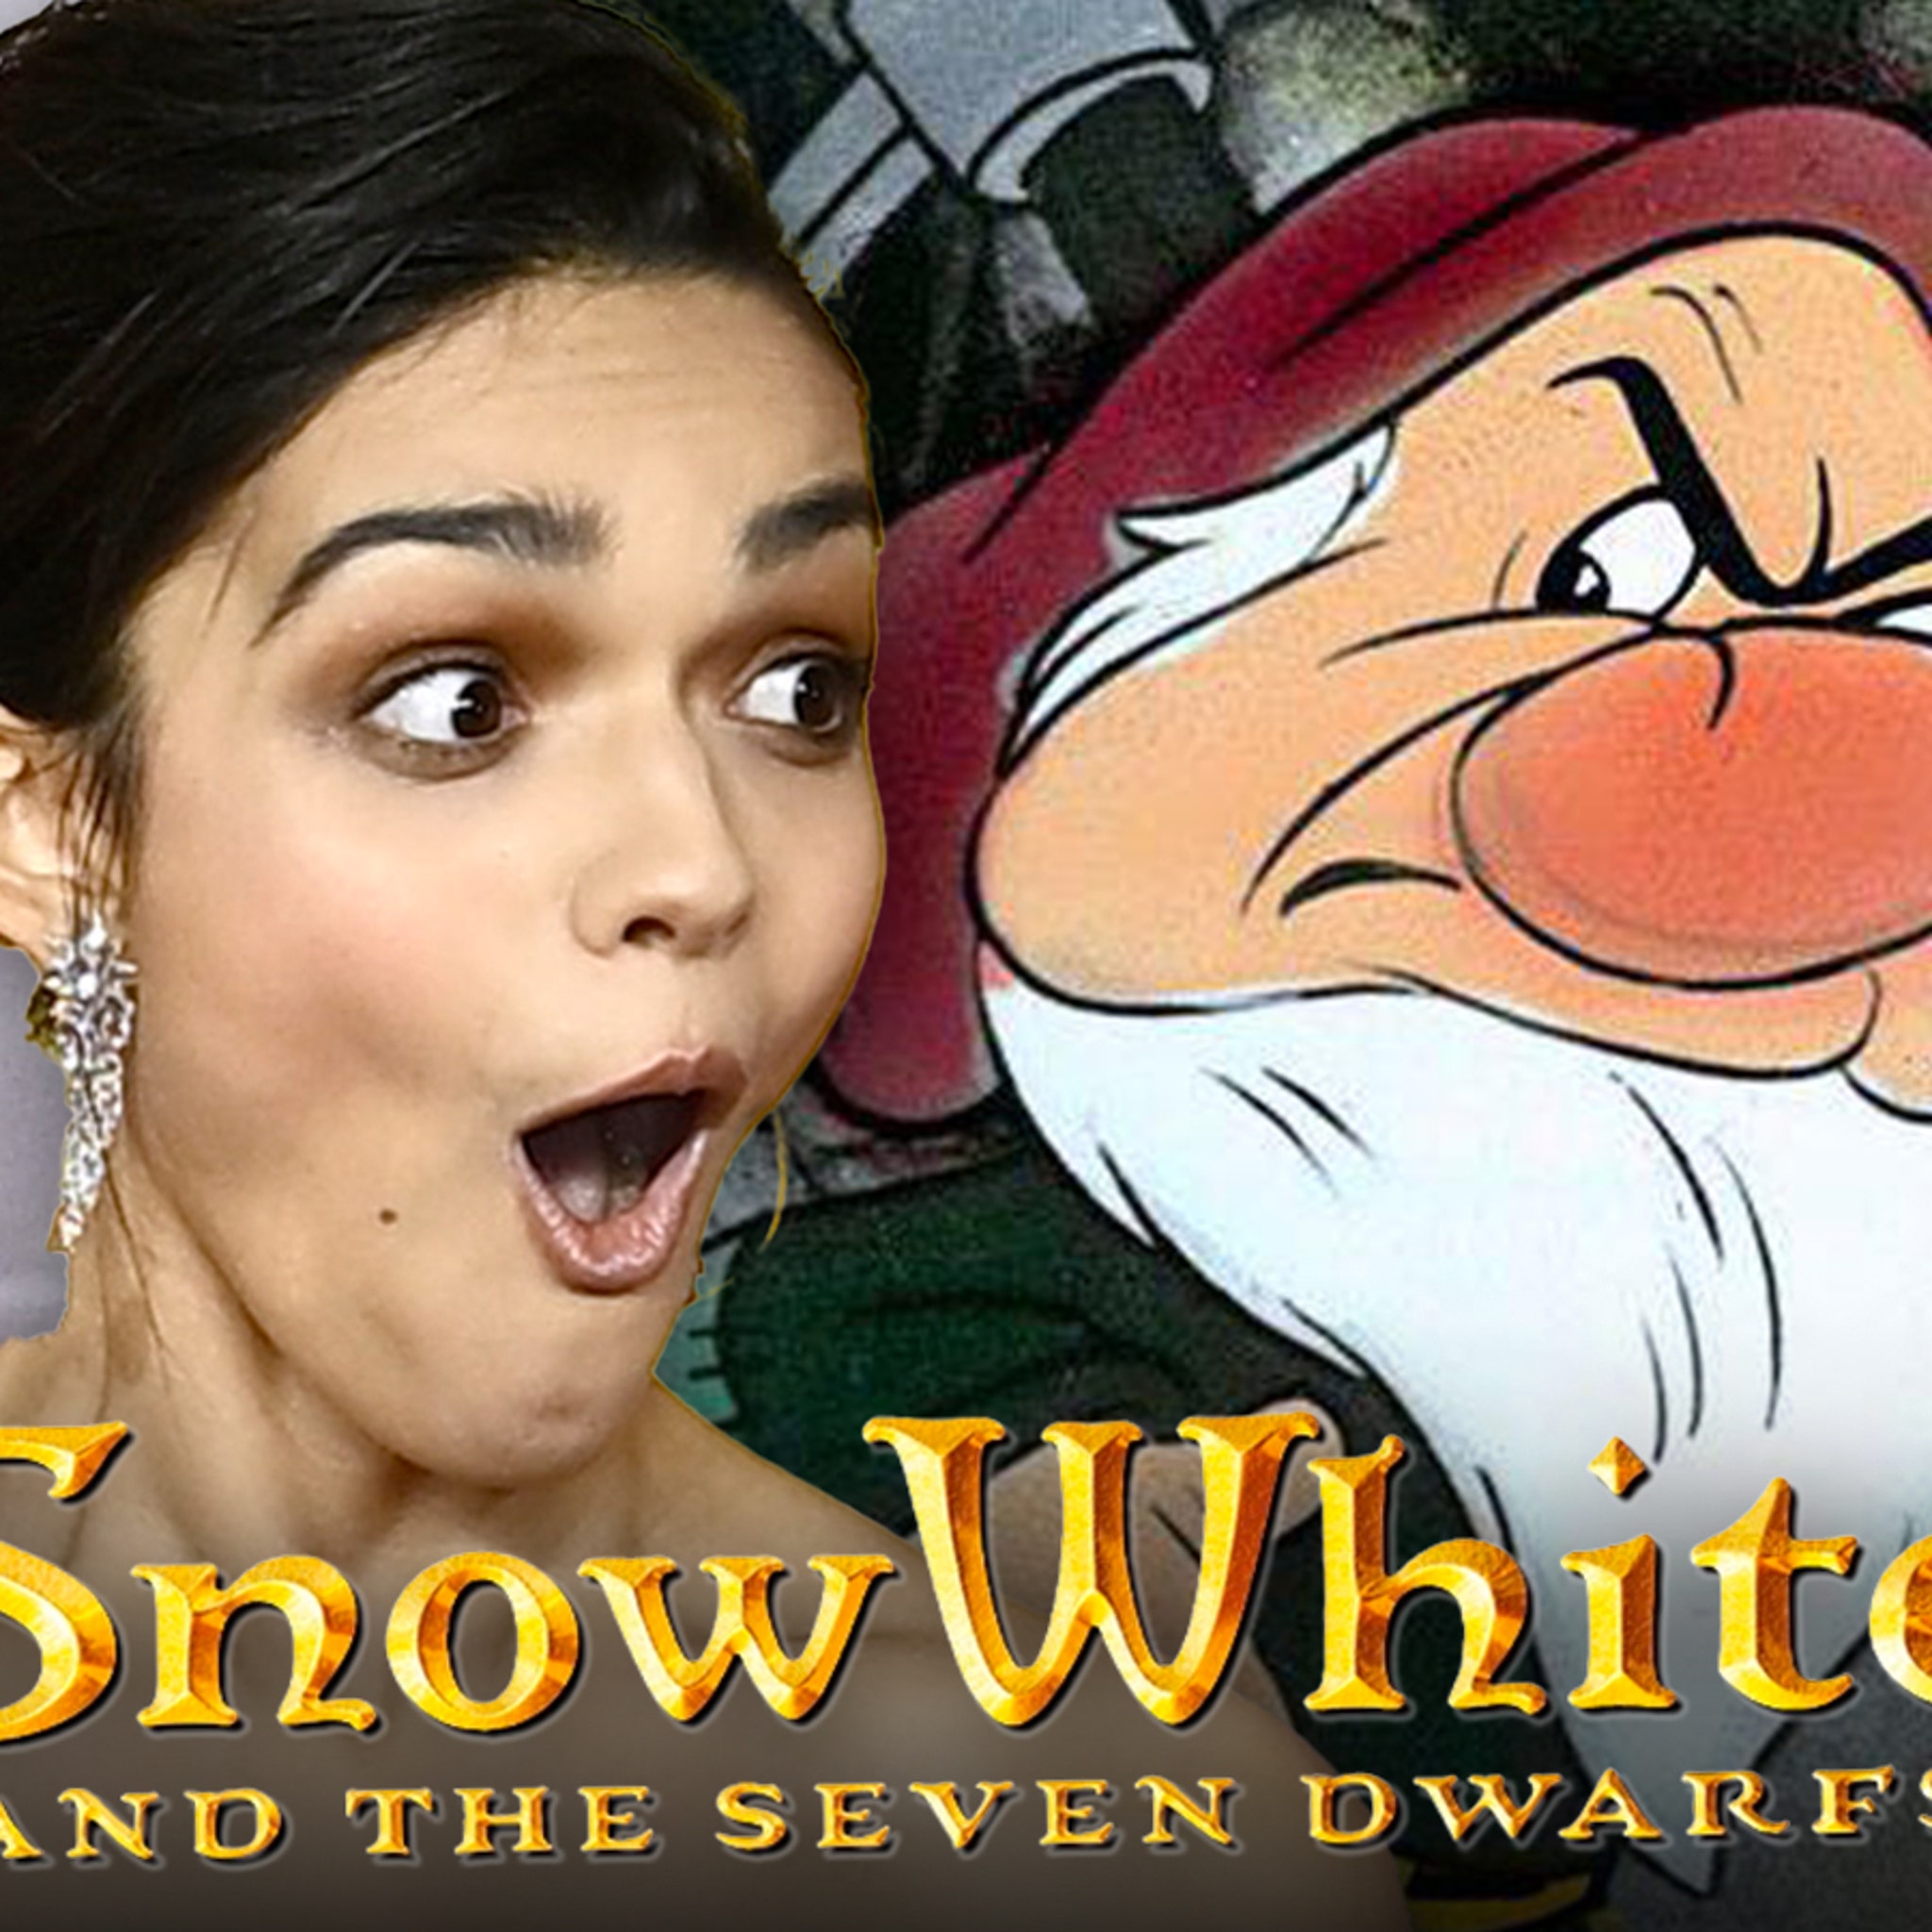 Rachel Zegler's 'Snow White' Reboot Delayed, CGI Dwarves Swapped In